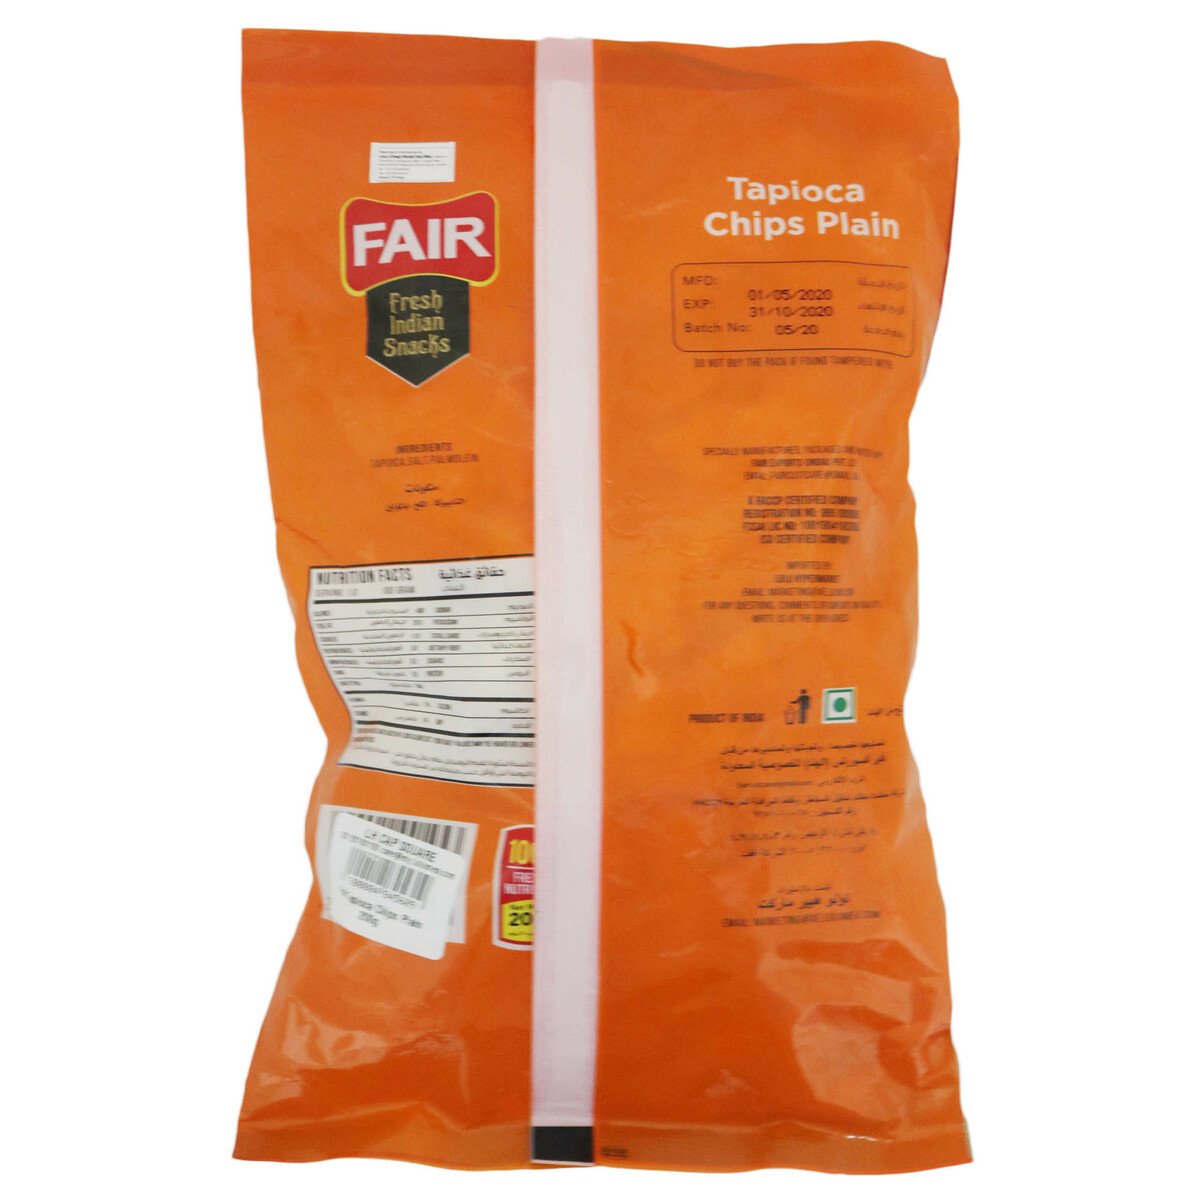 Fair Plain Tapioca Chips 200g